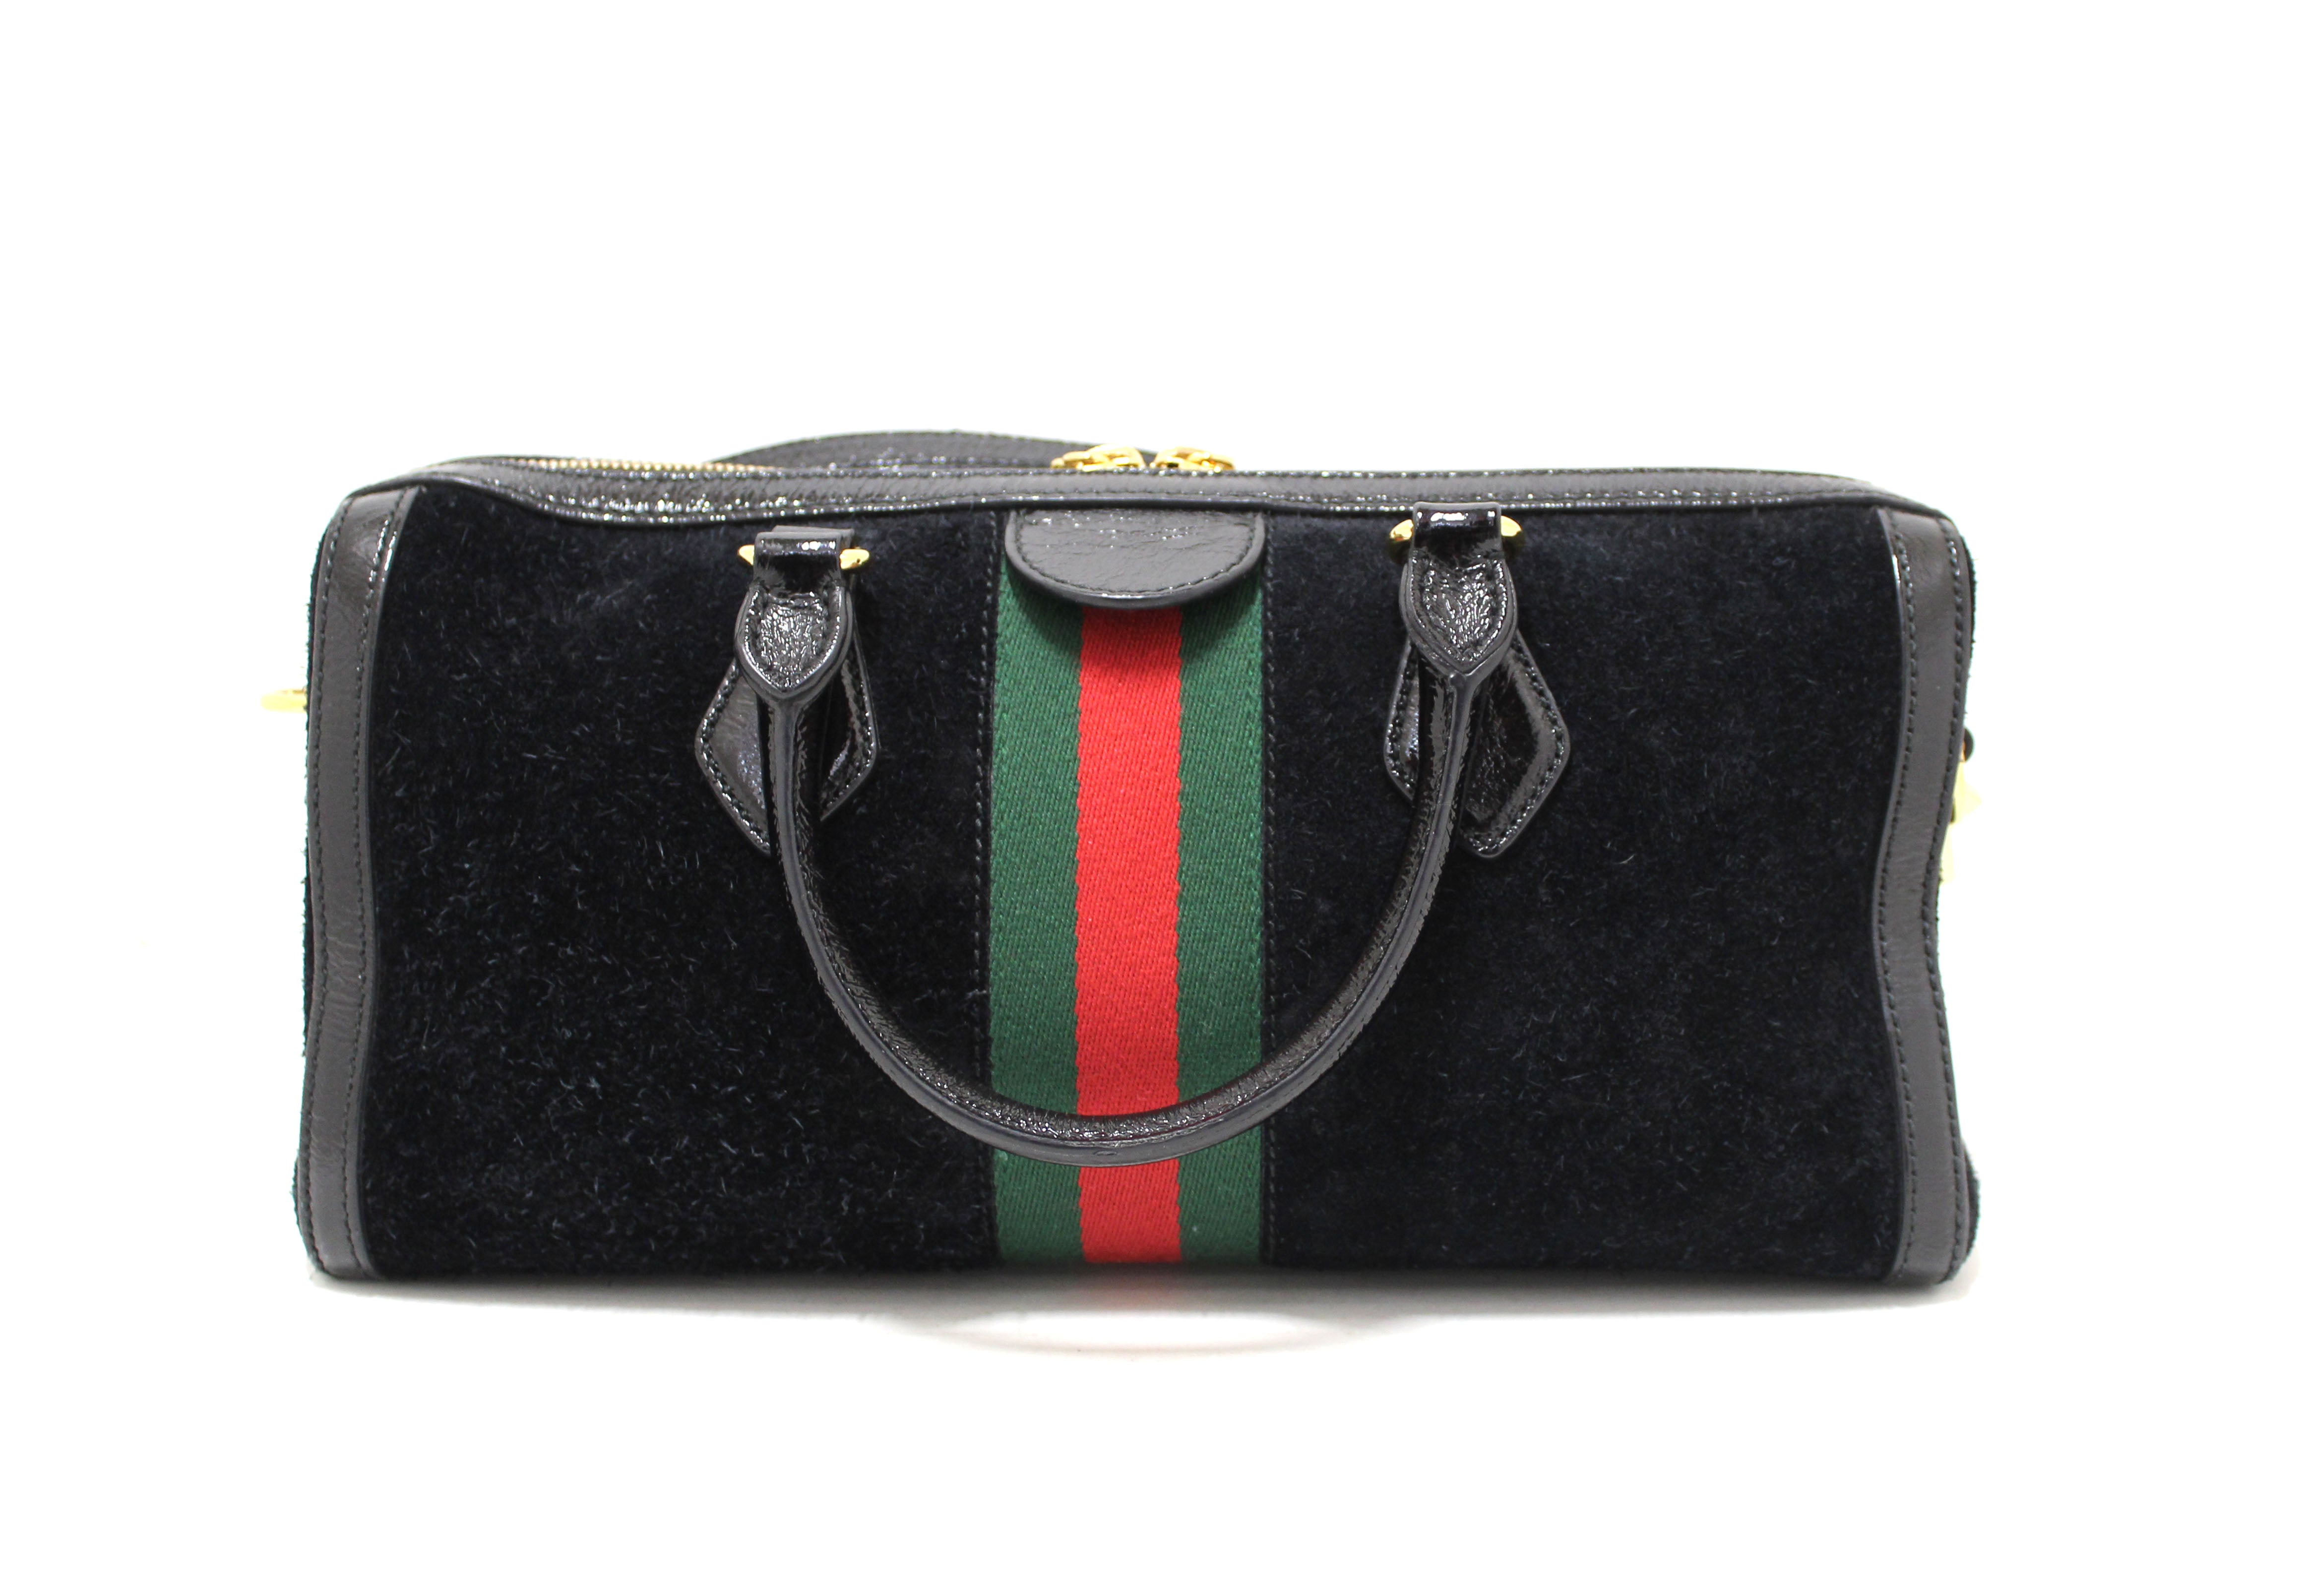 Authentic Gucci Black Suede/Patent Leather Medium Ophidia Boston Bag